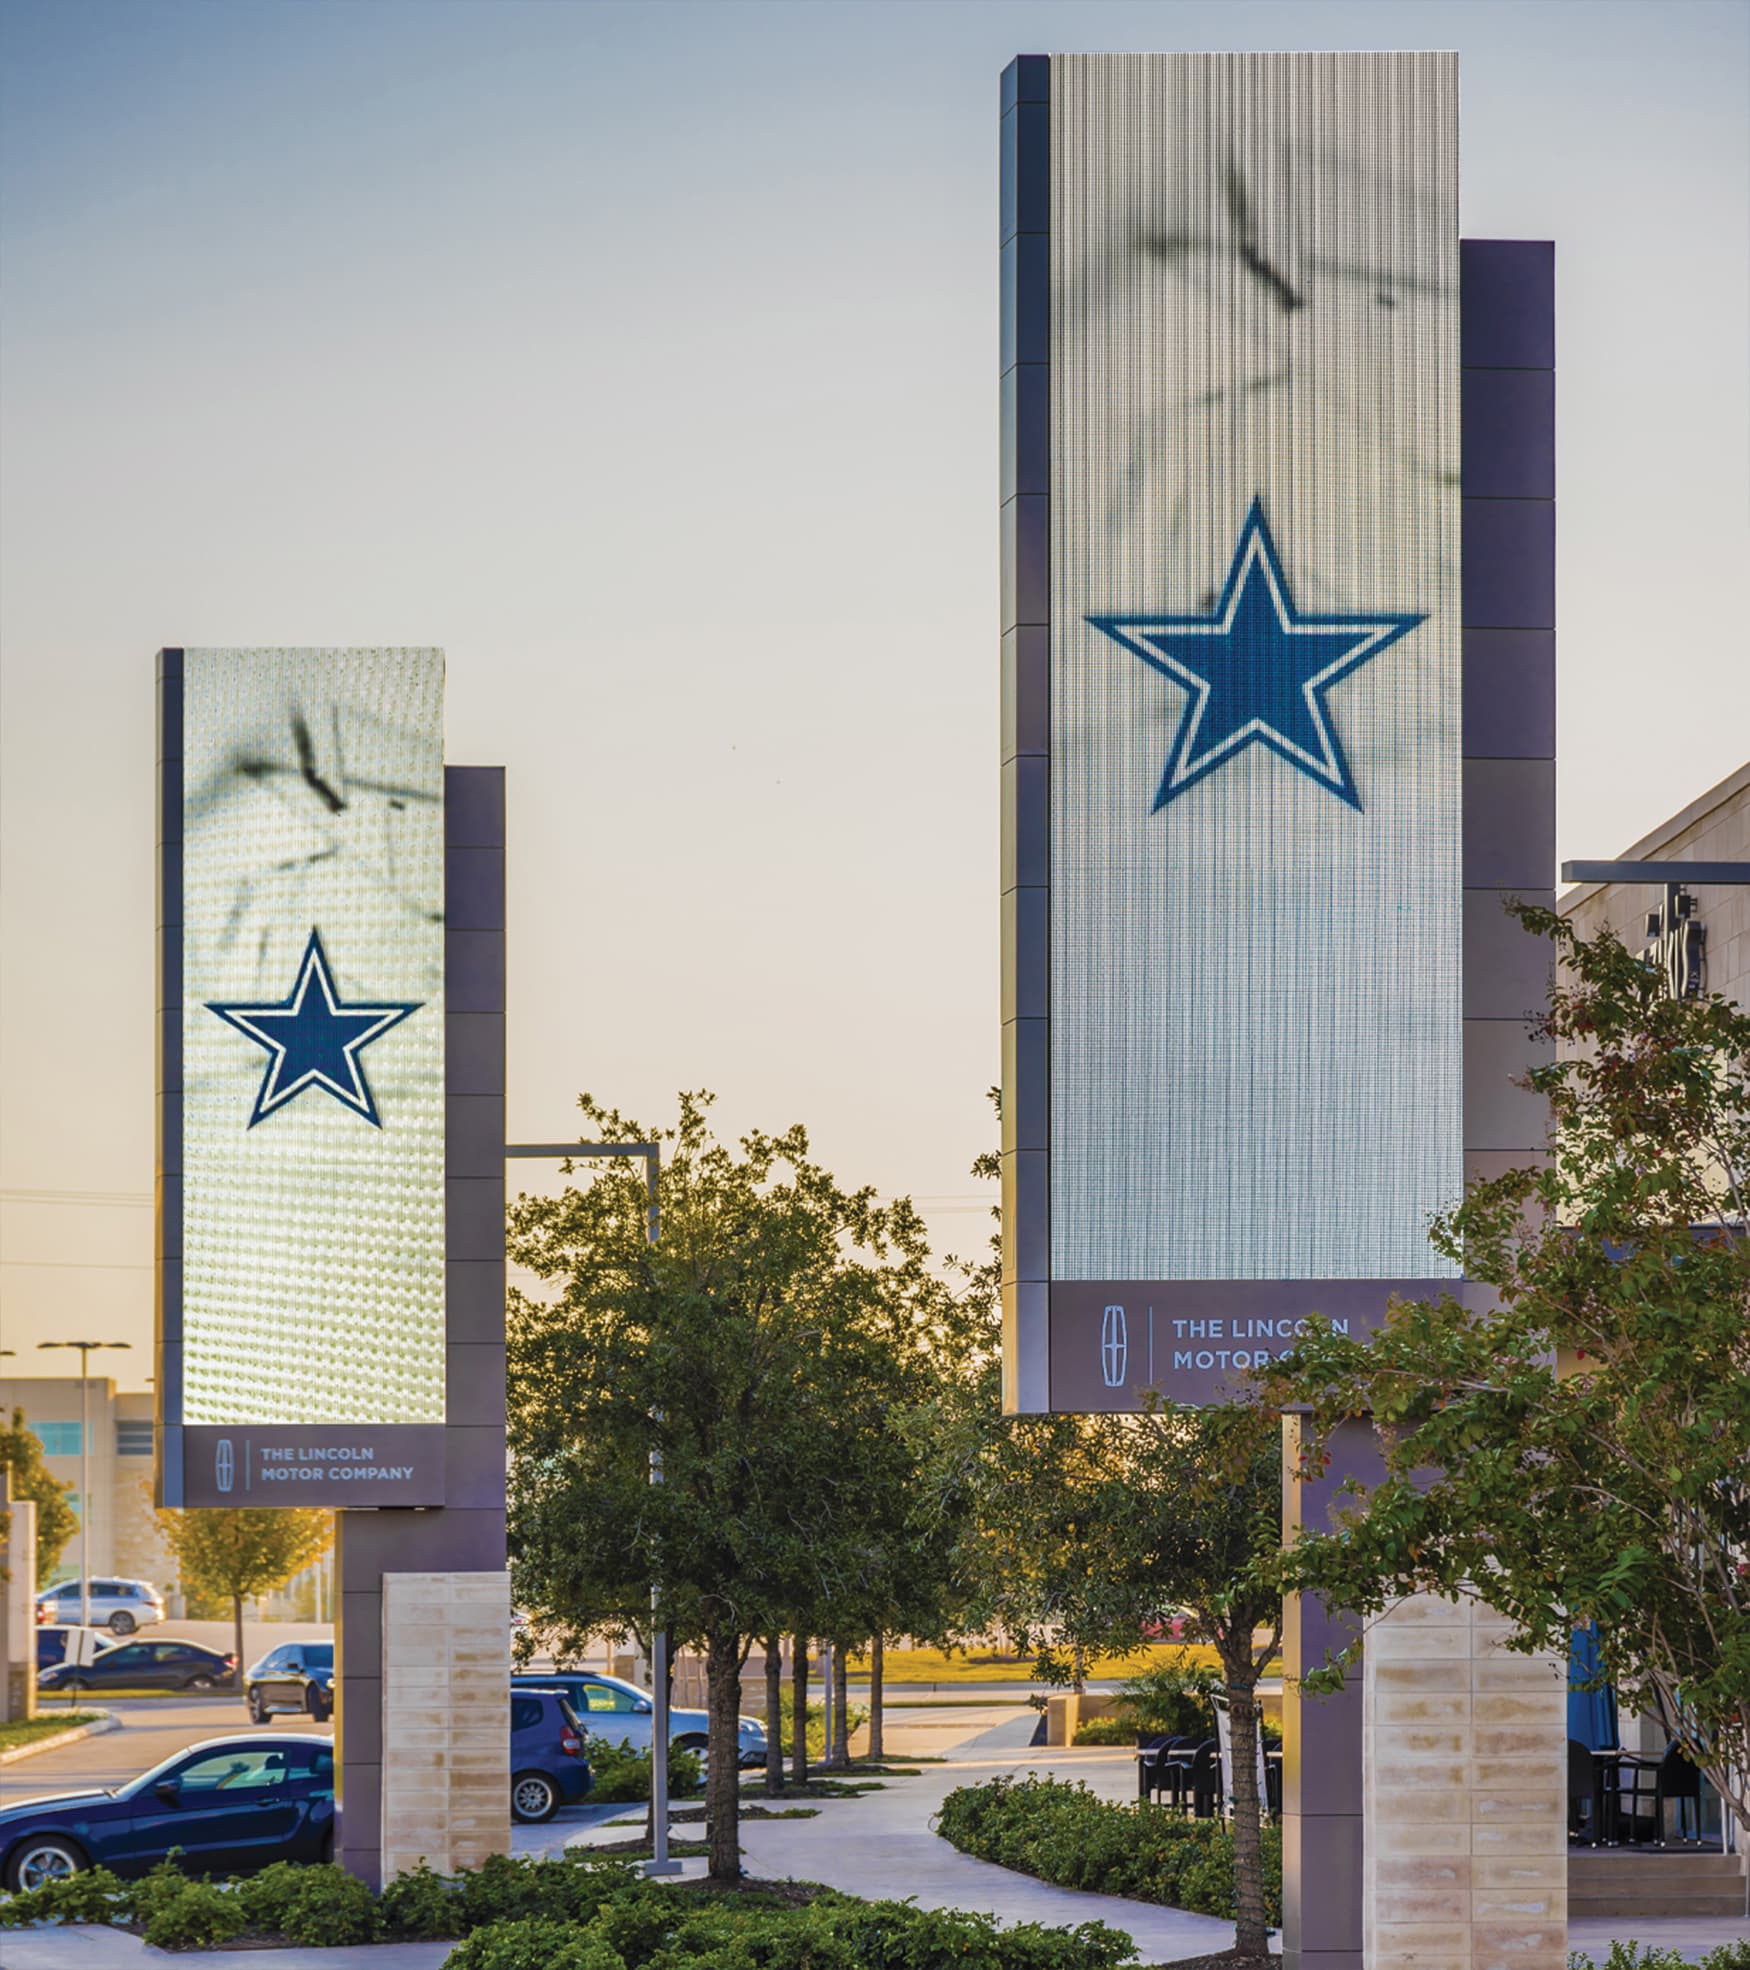 The Star Dallas Cowboys digital integration roadside signage